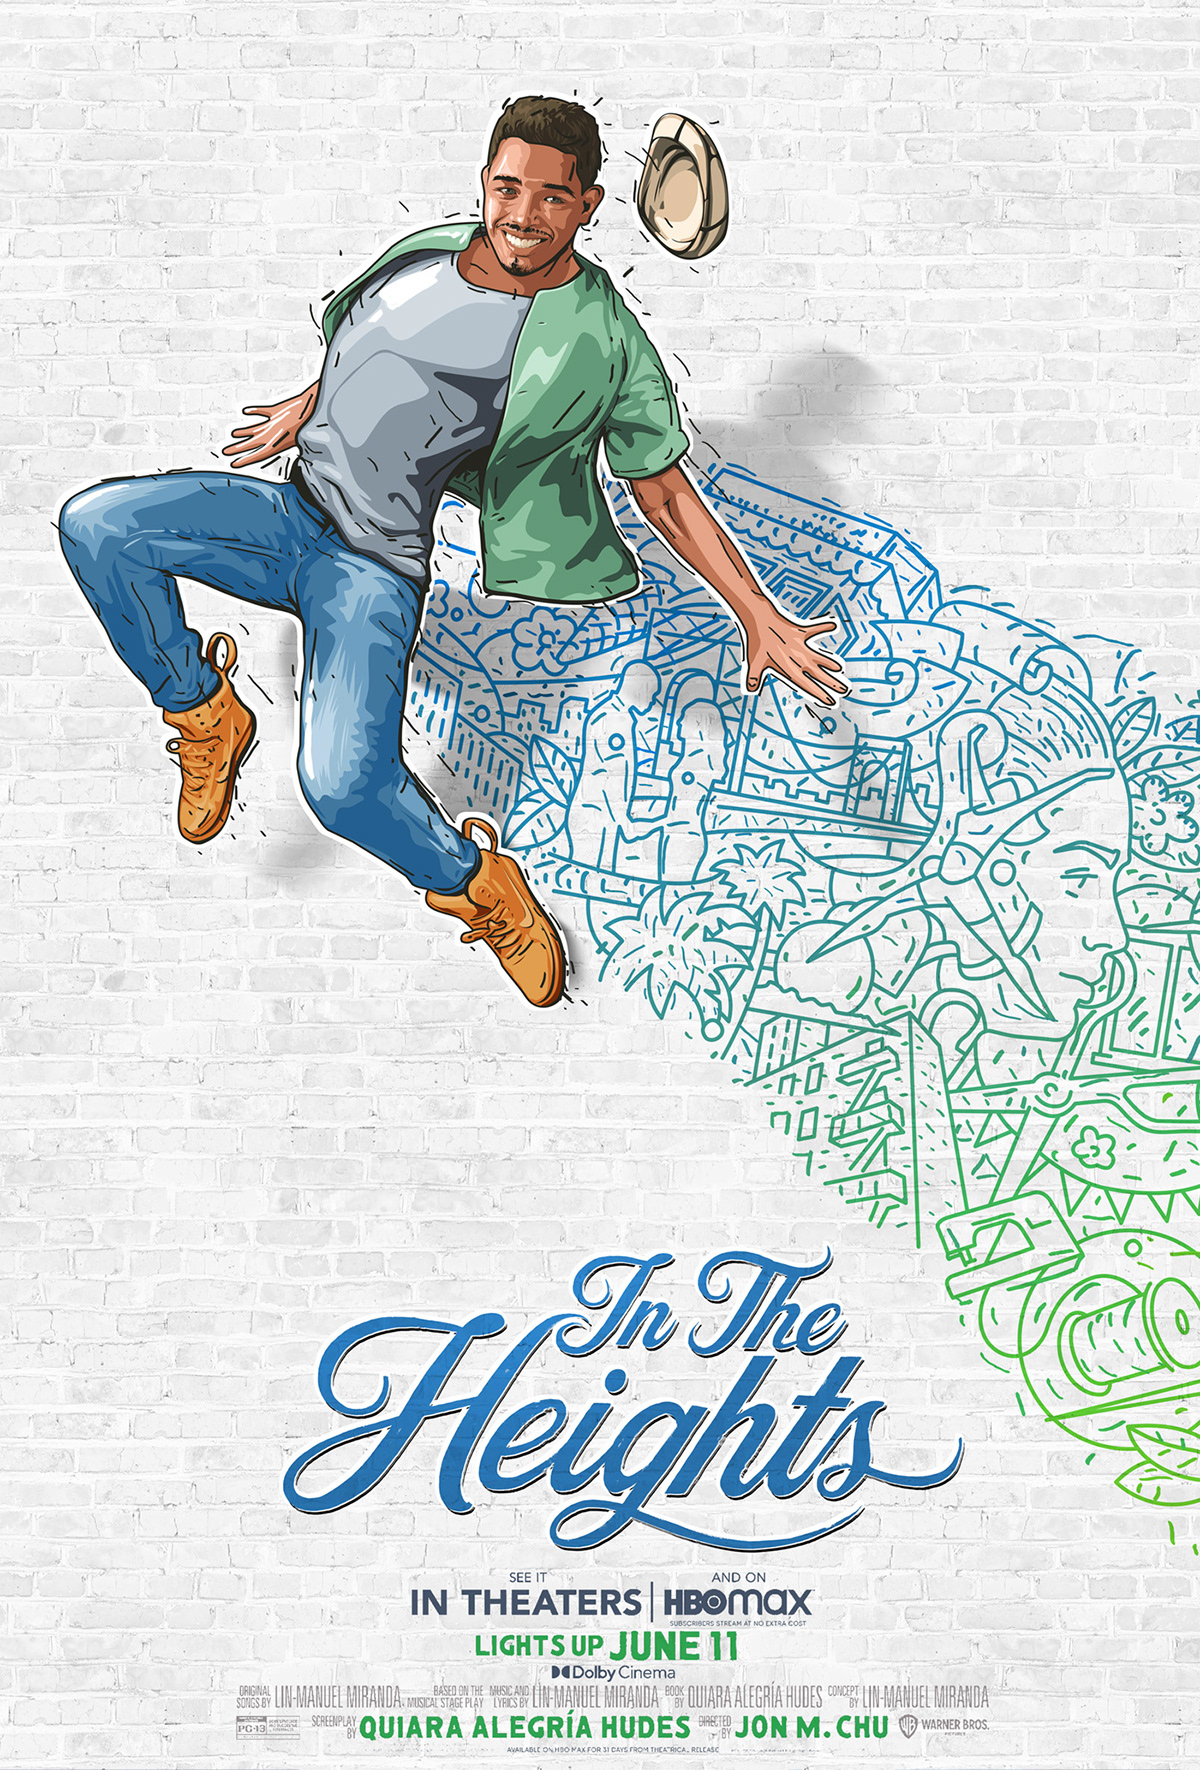 Billboards design Digital Art  Drawing  fedchenko Film   ILLUSTRATION  poster The Heights